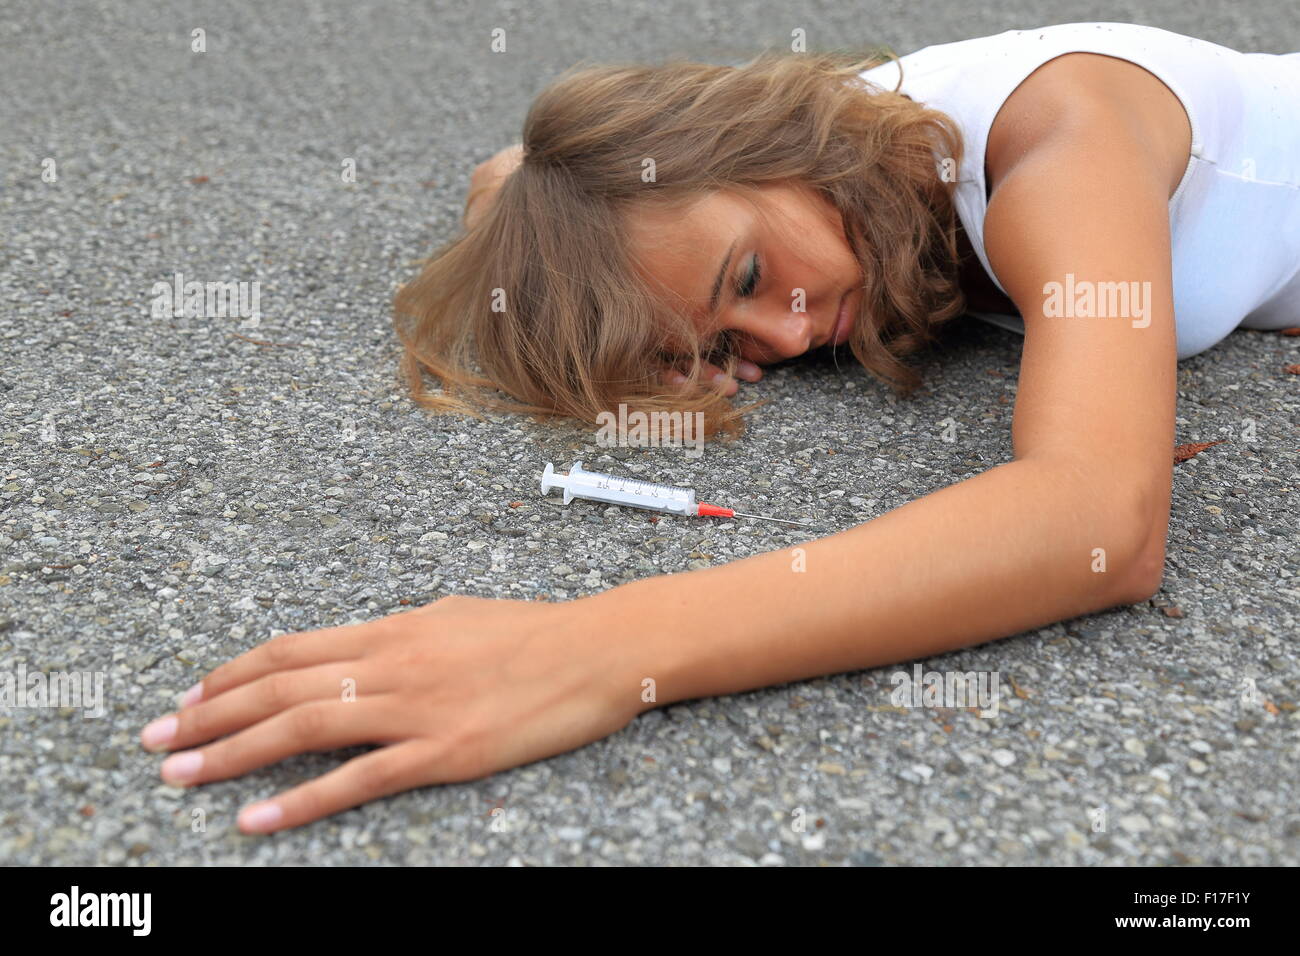 A Drug-addicted Teenager wirh syringe lying on a street Stock Photo